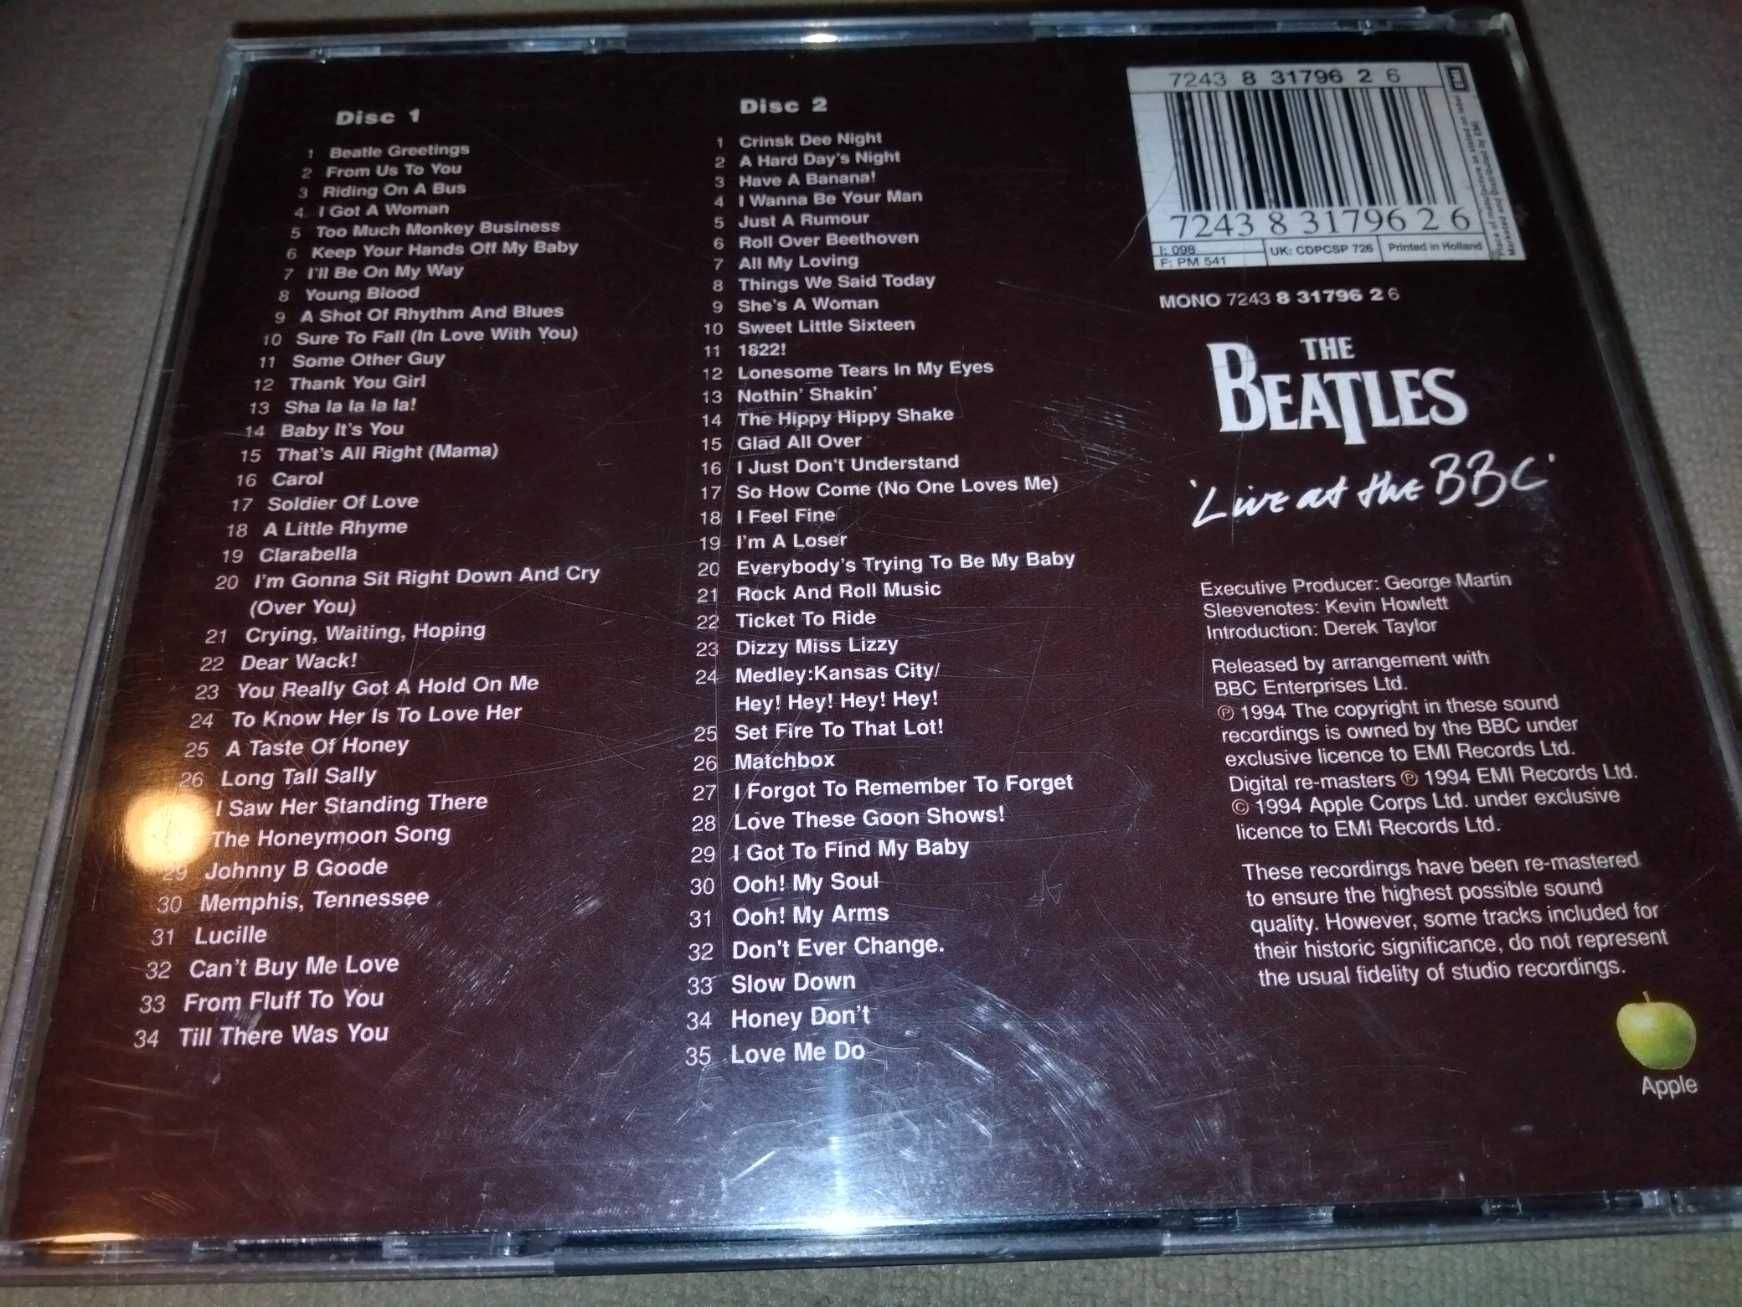 The Beatles Live at the BBC - 2 cd. box